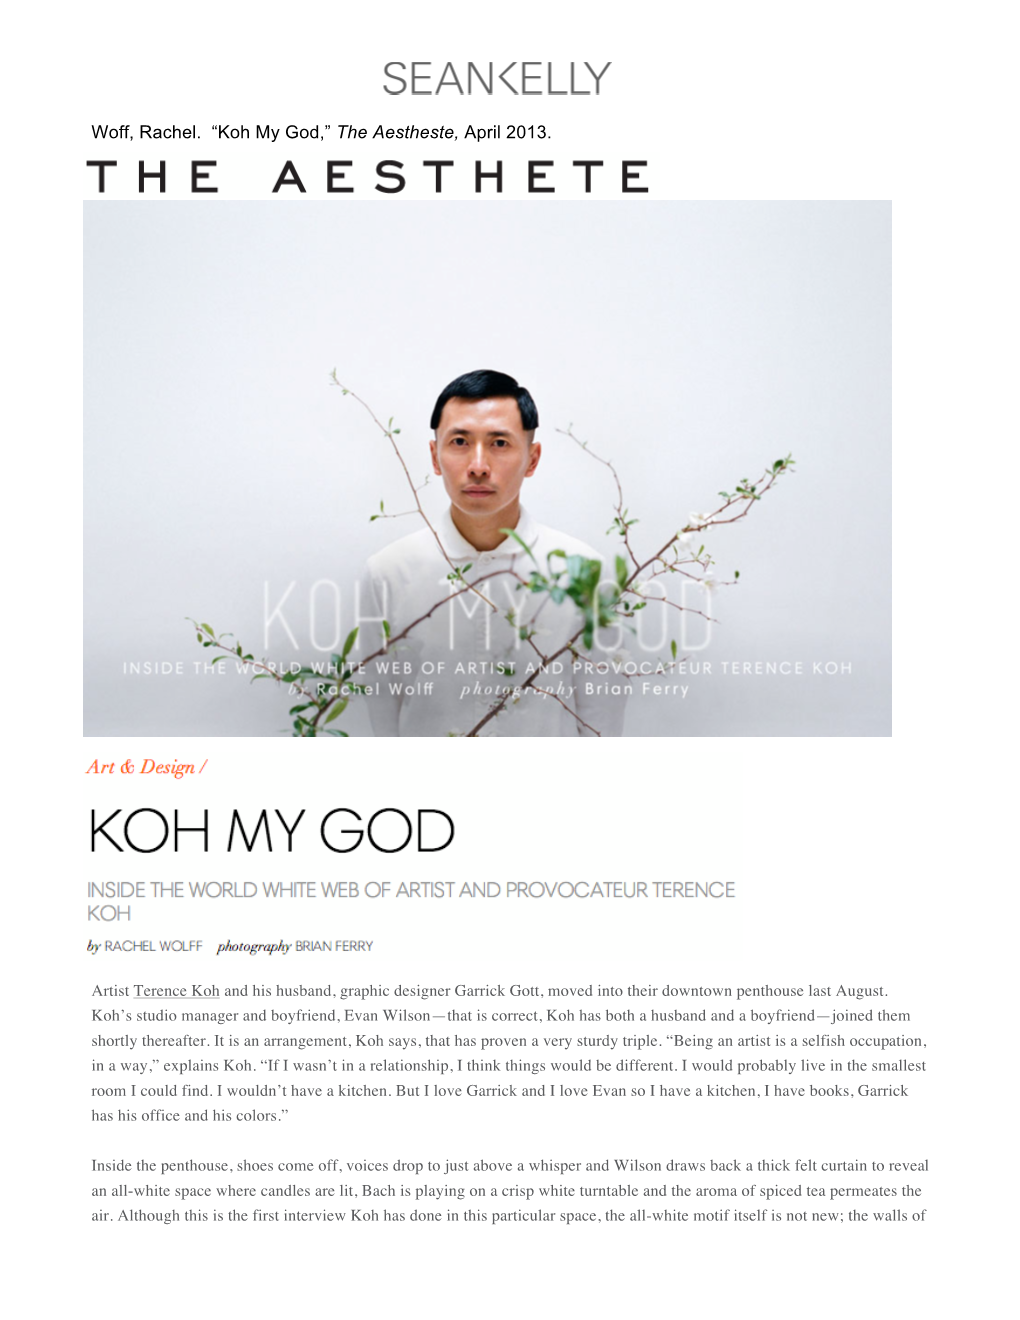 Koh My God,” the Aestheste, April 2013